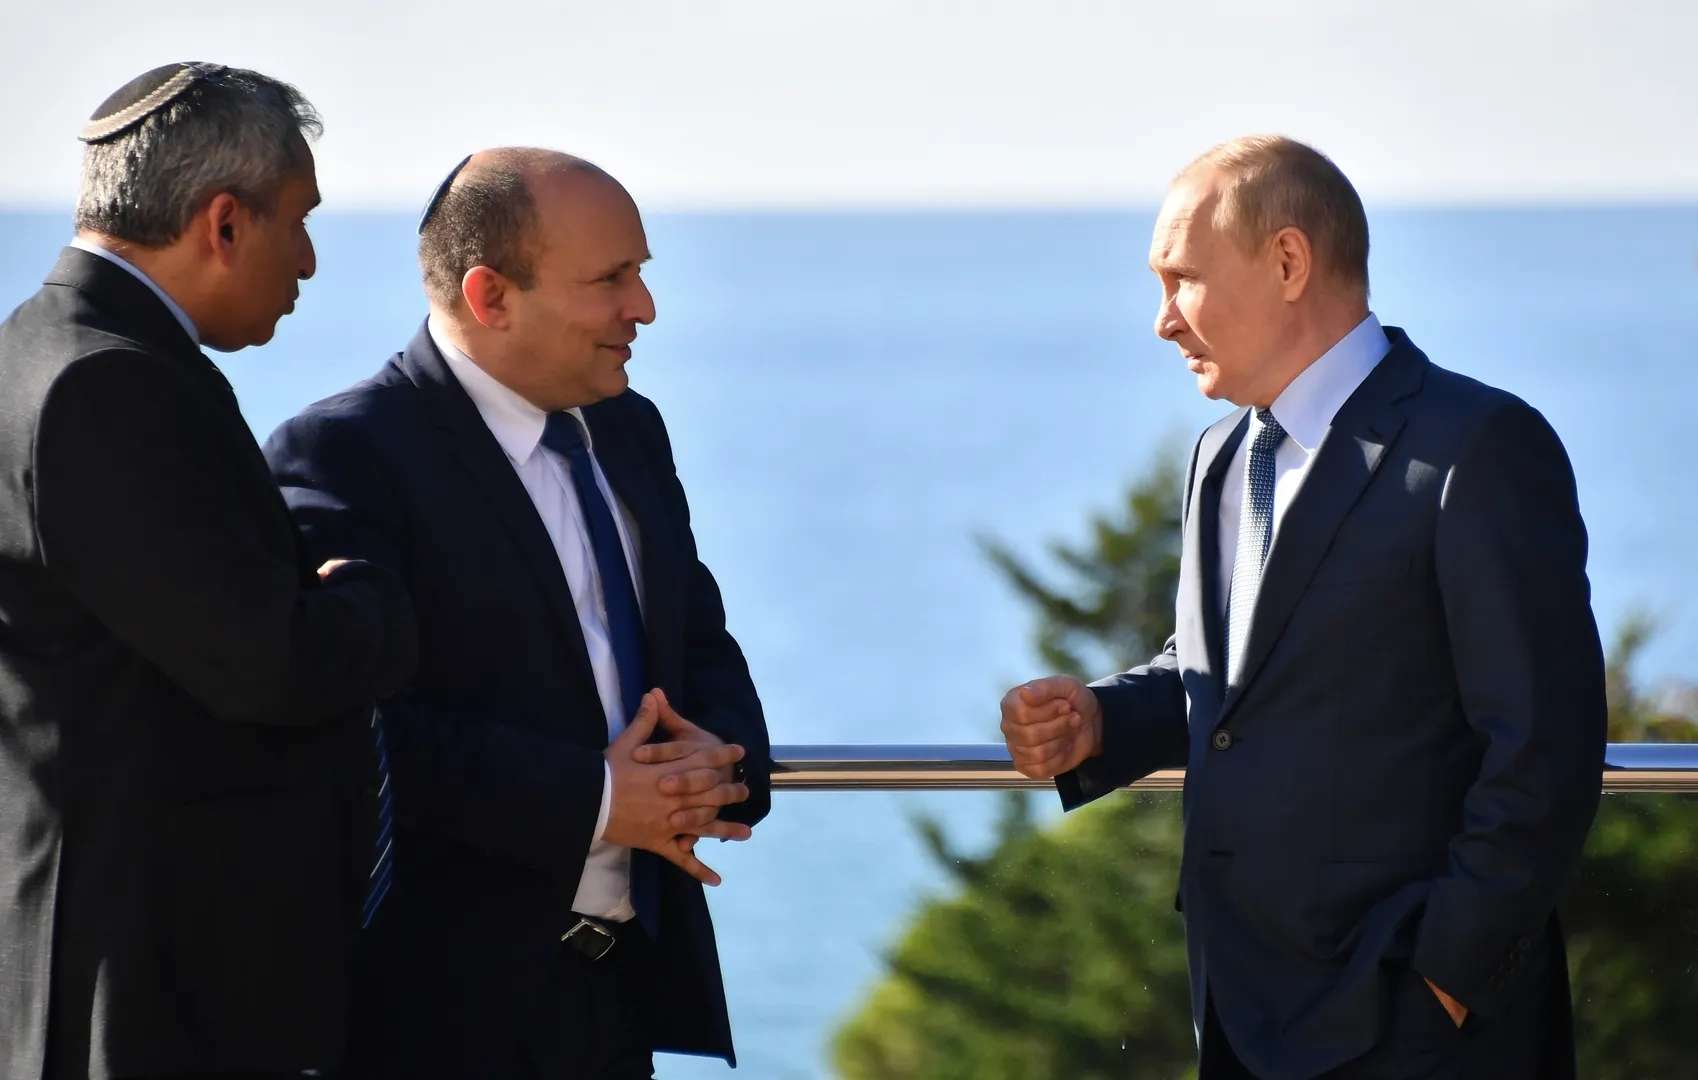 
											
											“Putin menga Zelenskiyni o‘ldirmaslikka va’da berdi” – Bennet
											
											